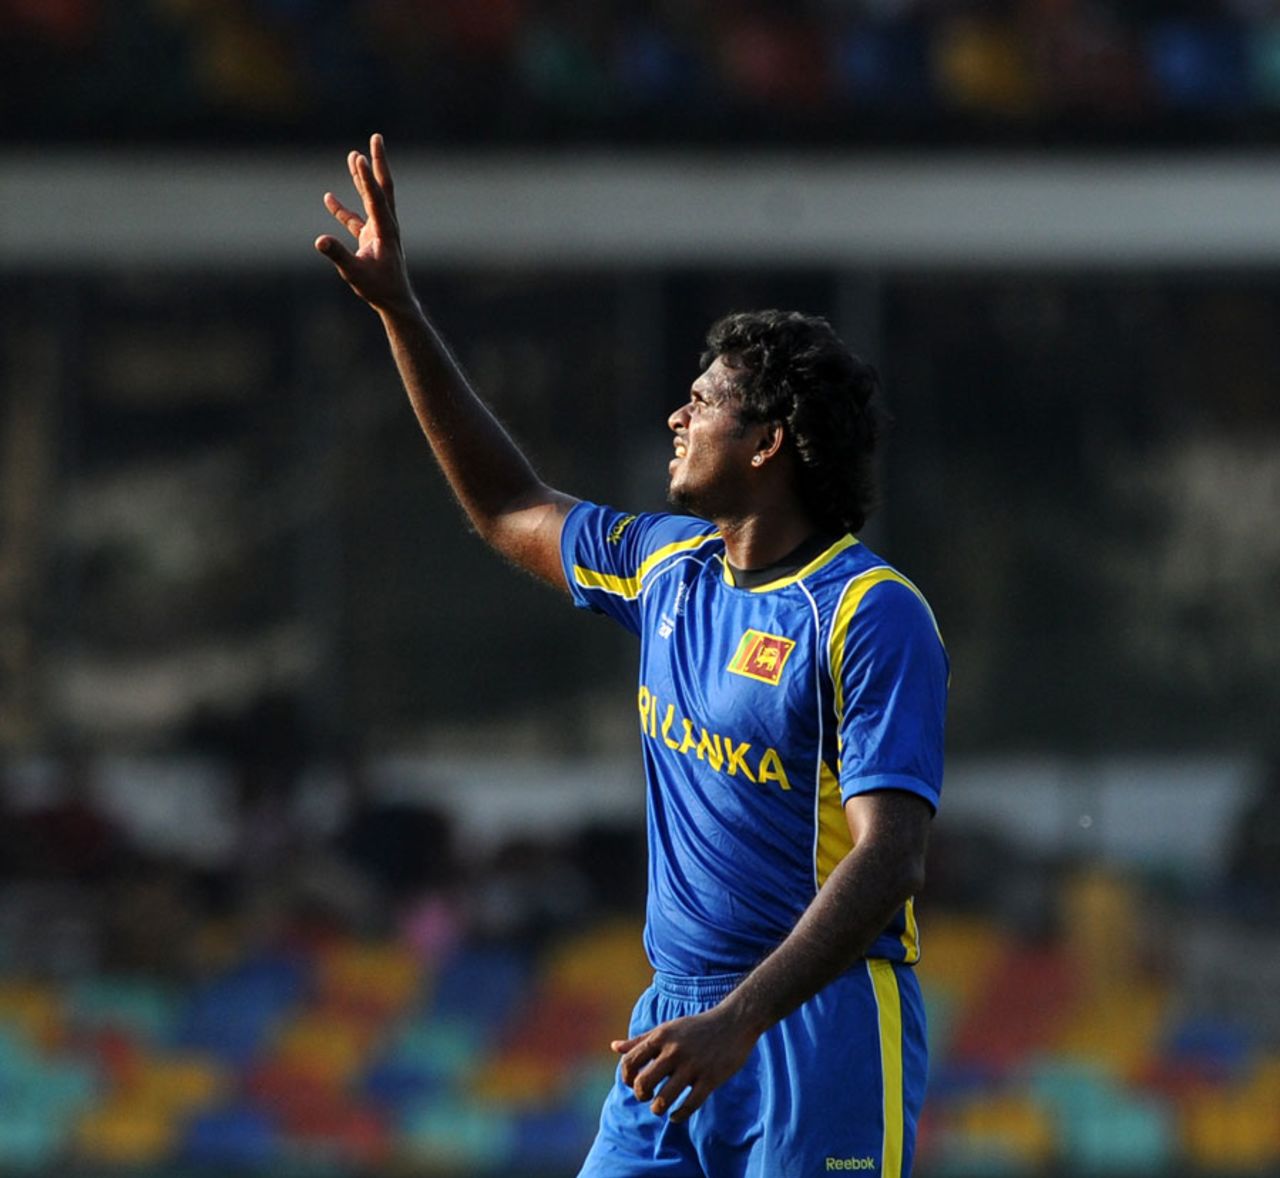 Dilhara Fernando picked up four wickets in Sri Lanka's win, Sri Lanka v Netherlands World Cup warm-up match, Colombo, February 12, 2011